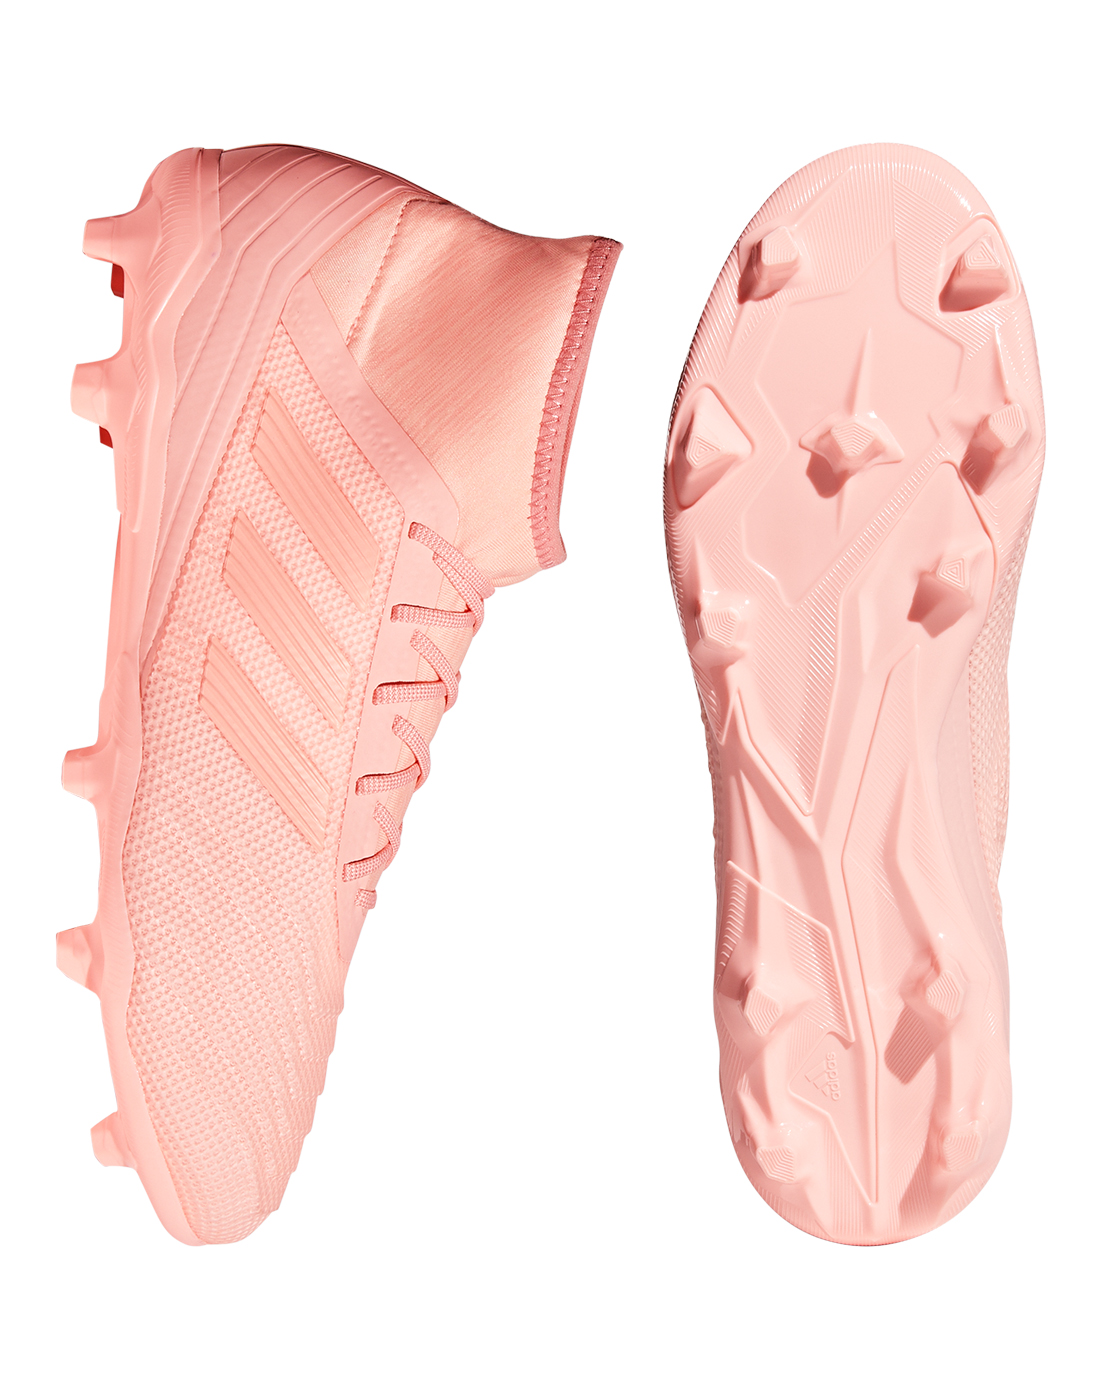 adidas predator 18.2 fg pink